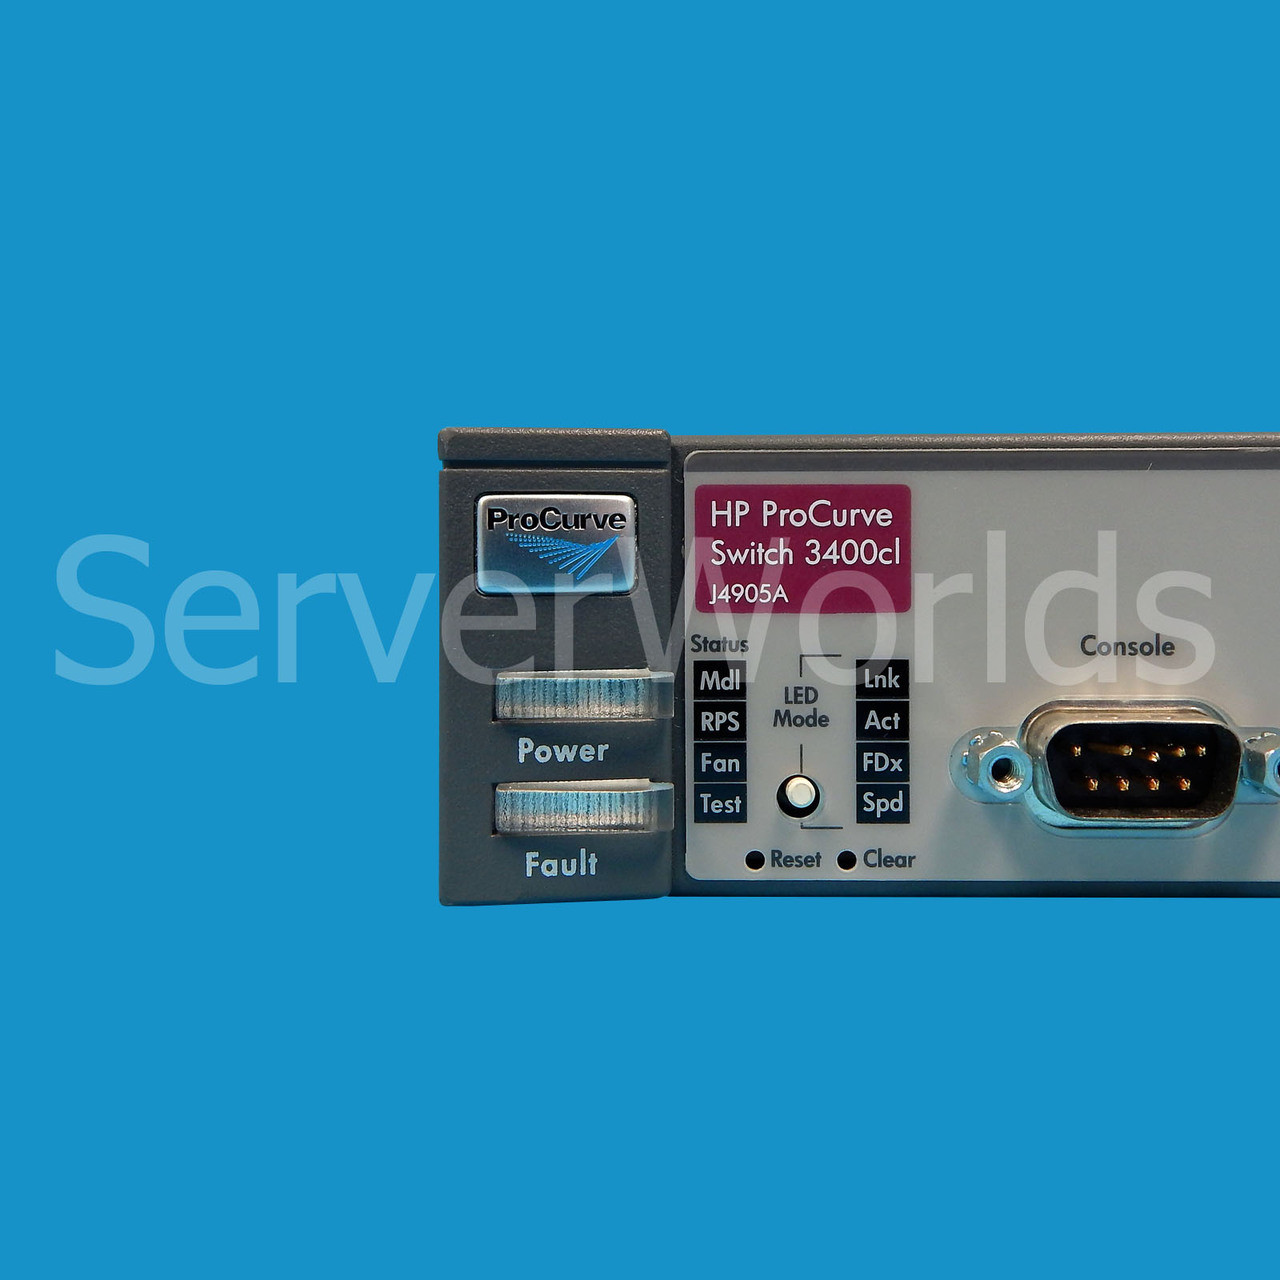 HP J4905A ProCurve 3400CL-25G Switch